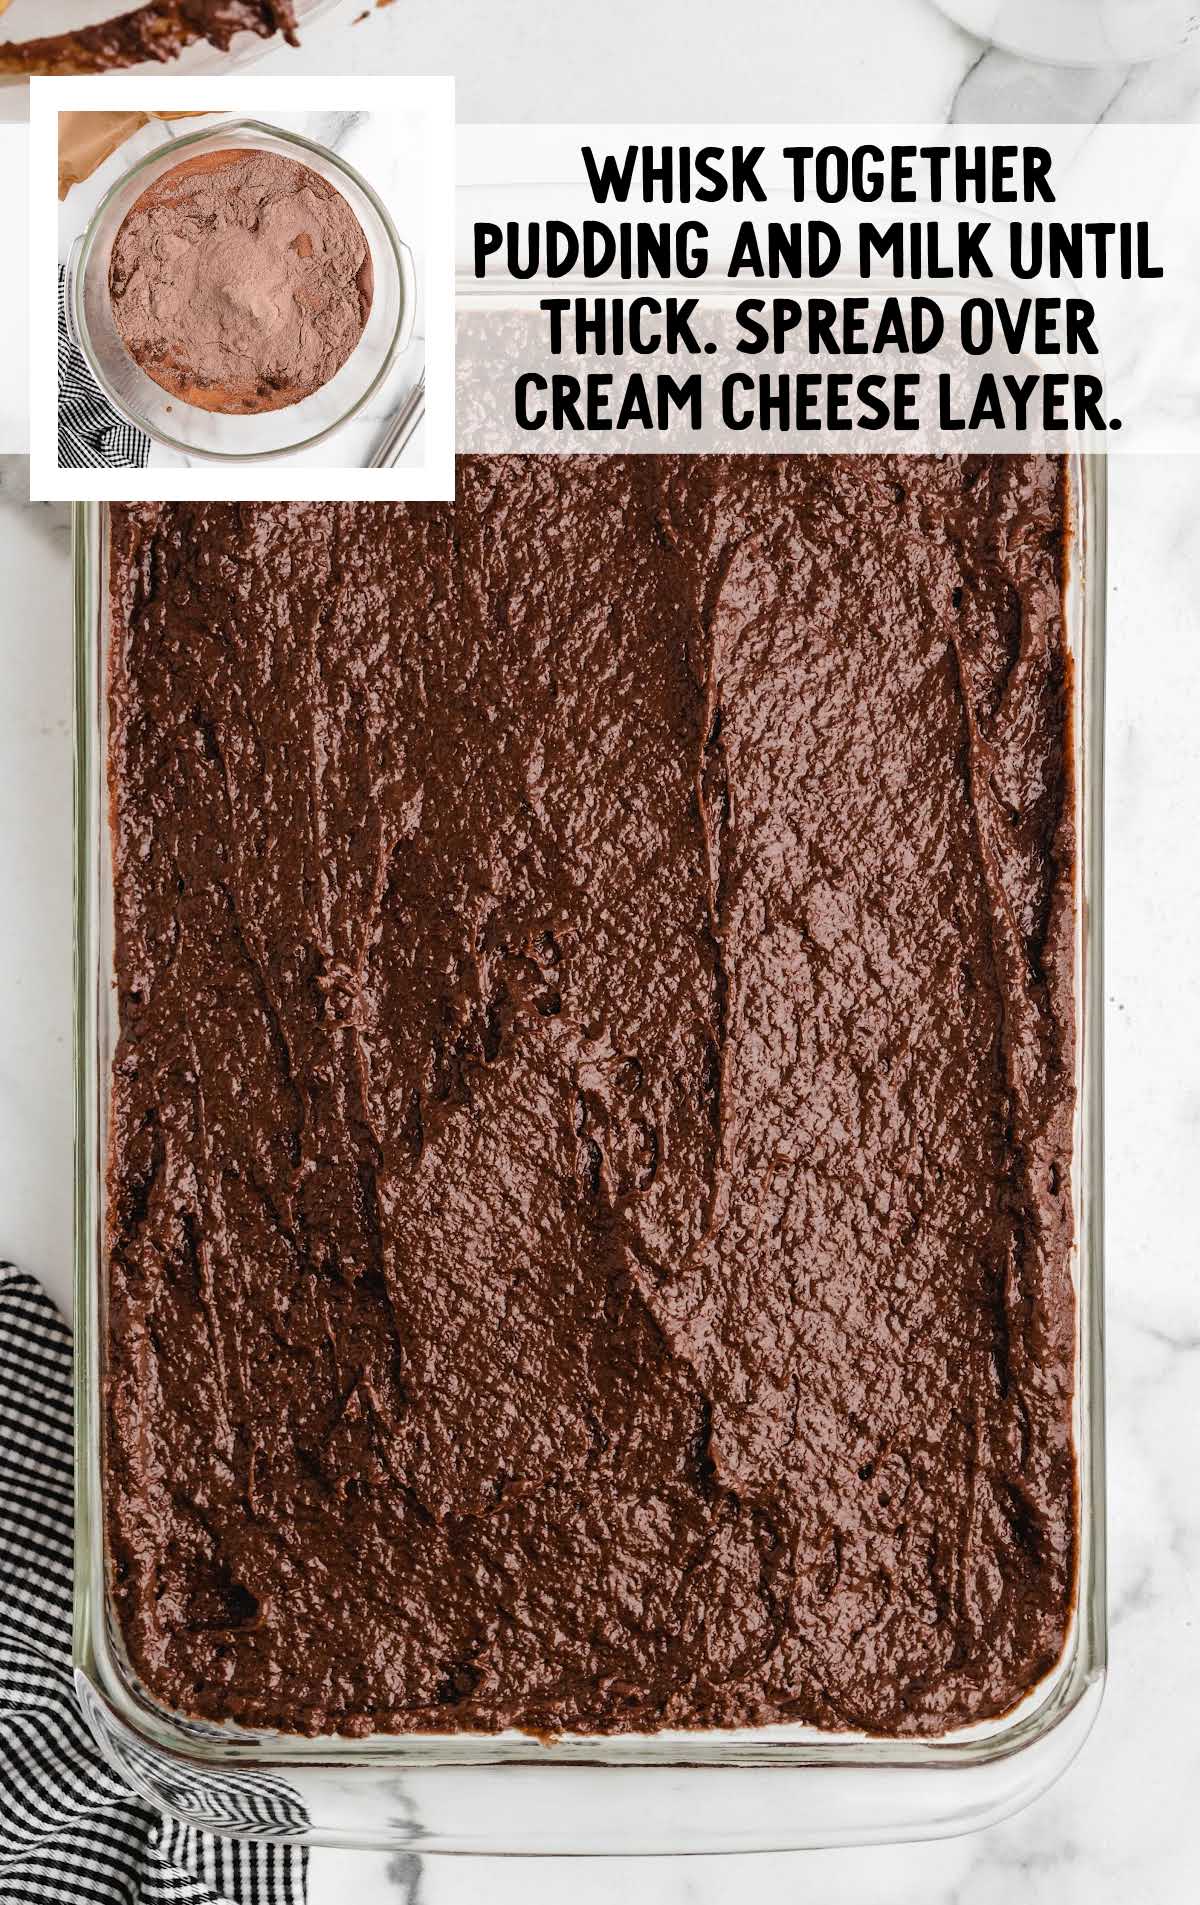 pudding layer spread over cream cheese layer